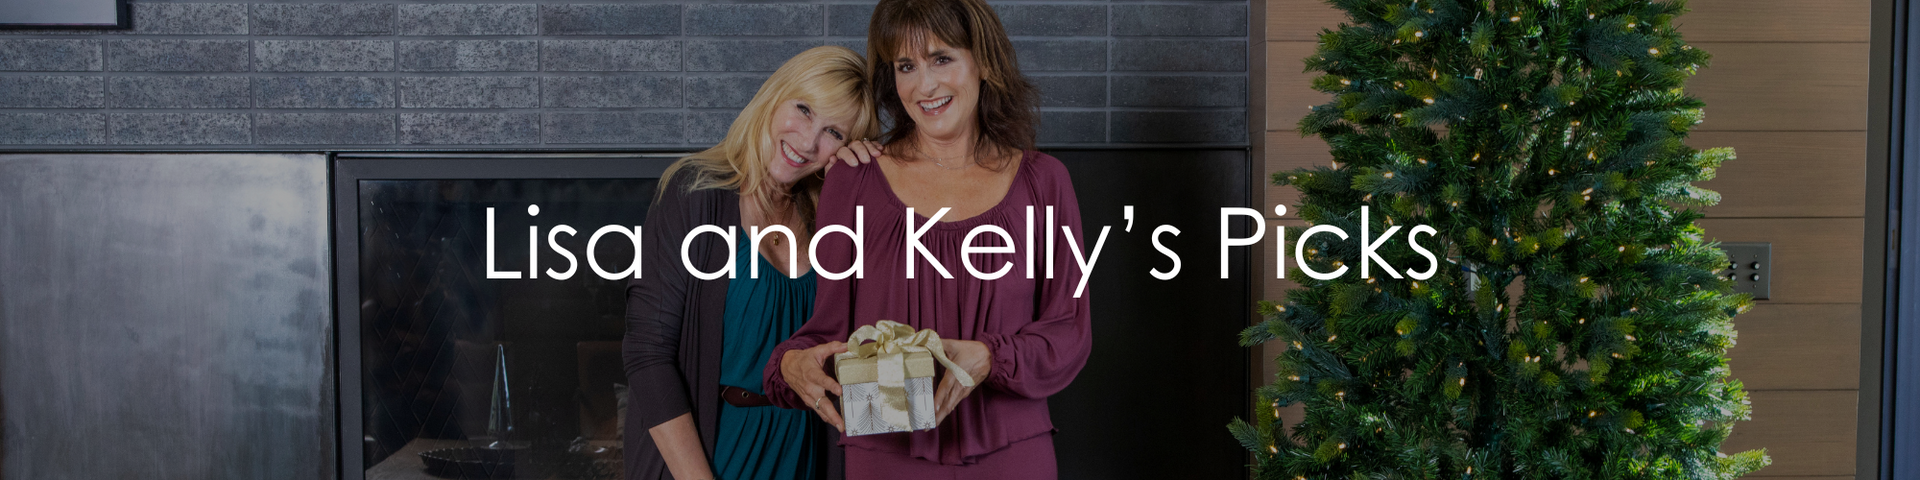 Lisa and Kelly's Picks